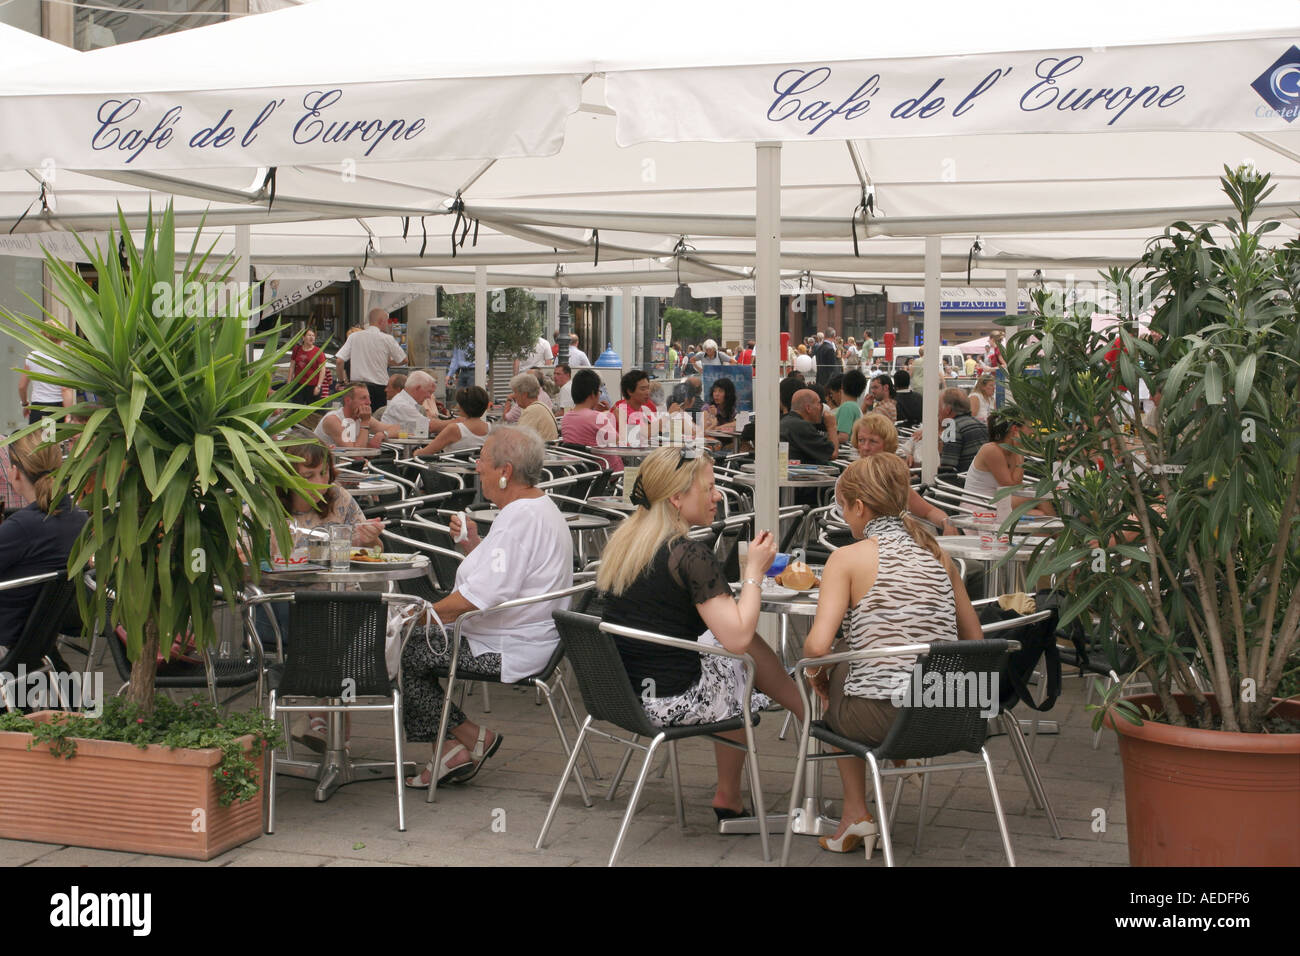 Café del' Europe, Graben, Vienna Stock Photo